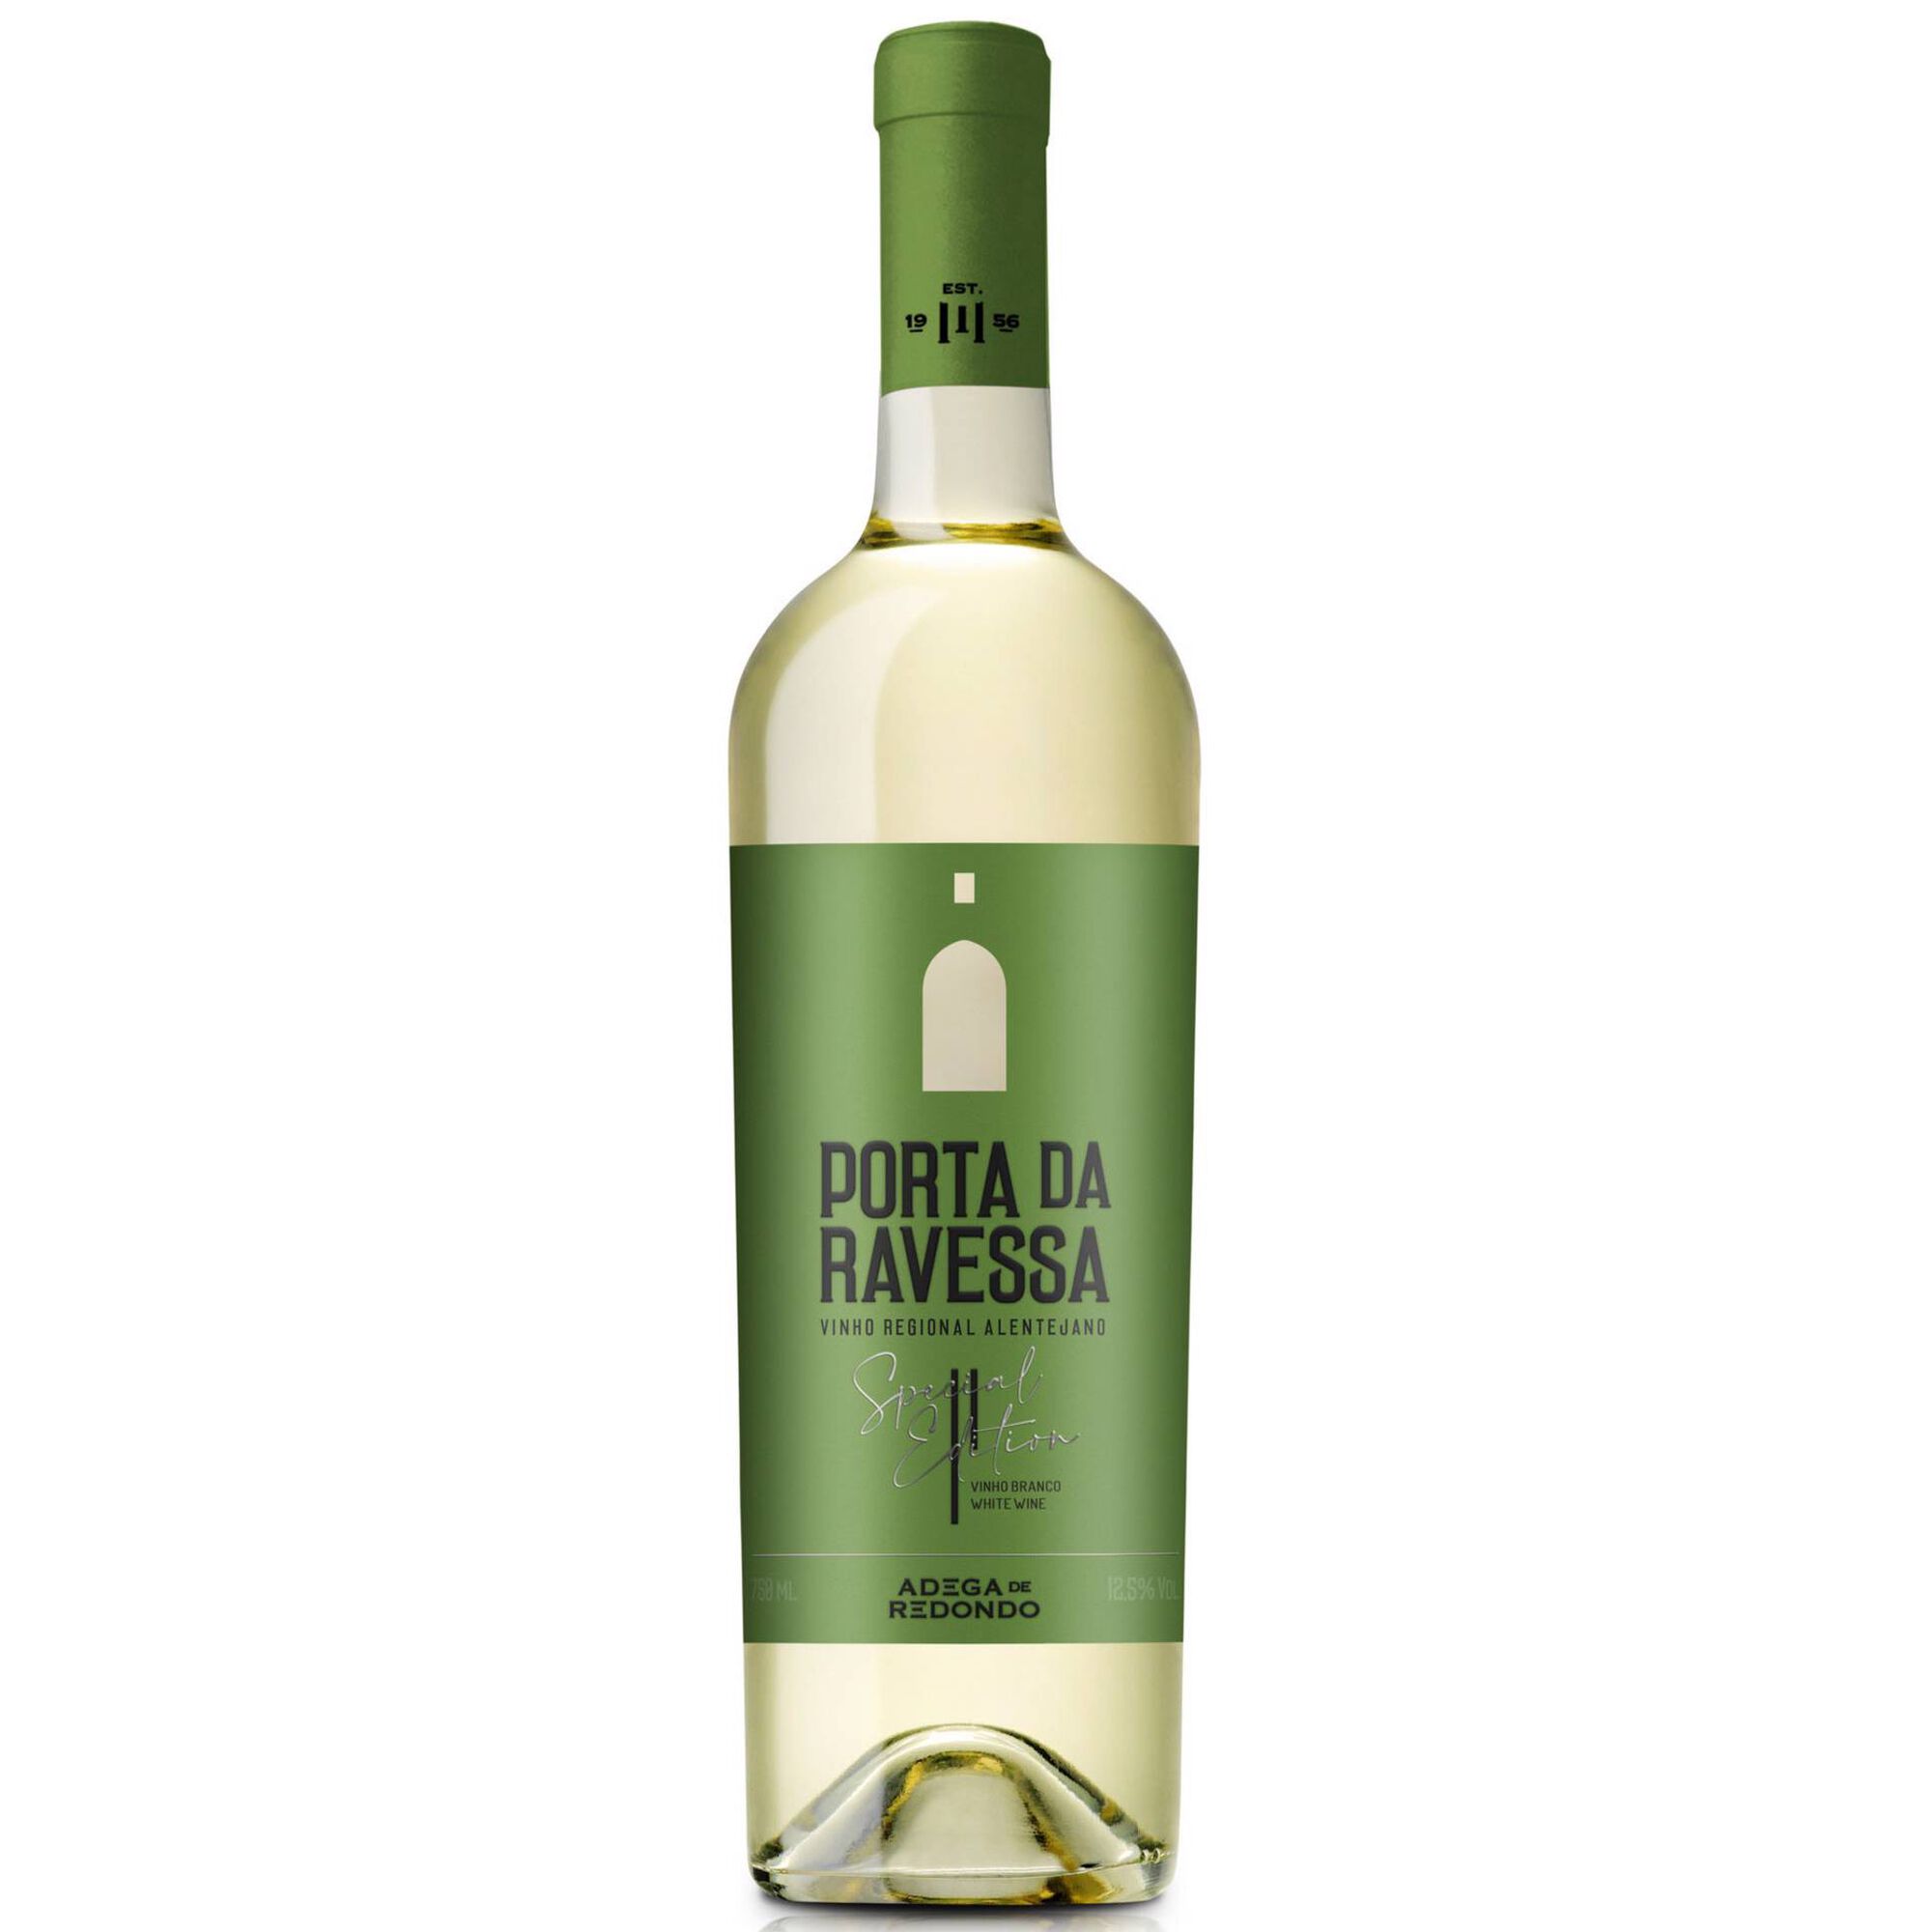 Porta da Ravessa Special Edition Regional Alentejano Vinho Branco